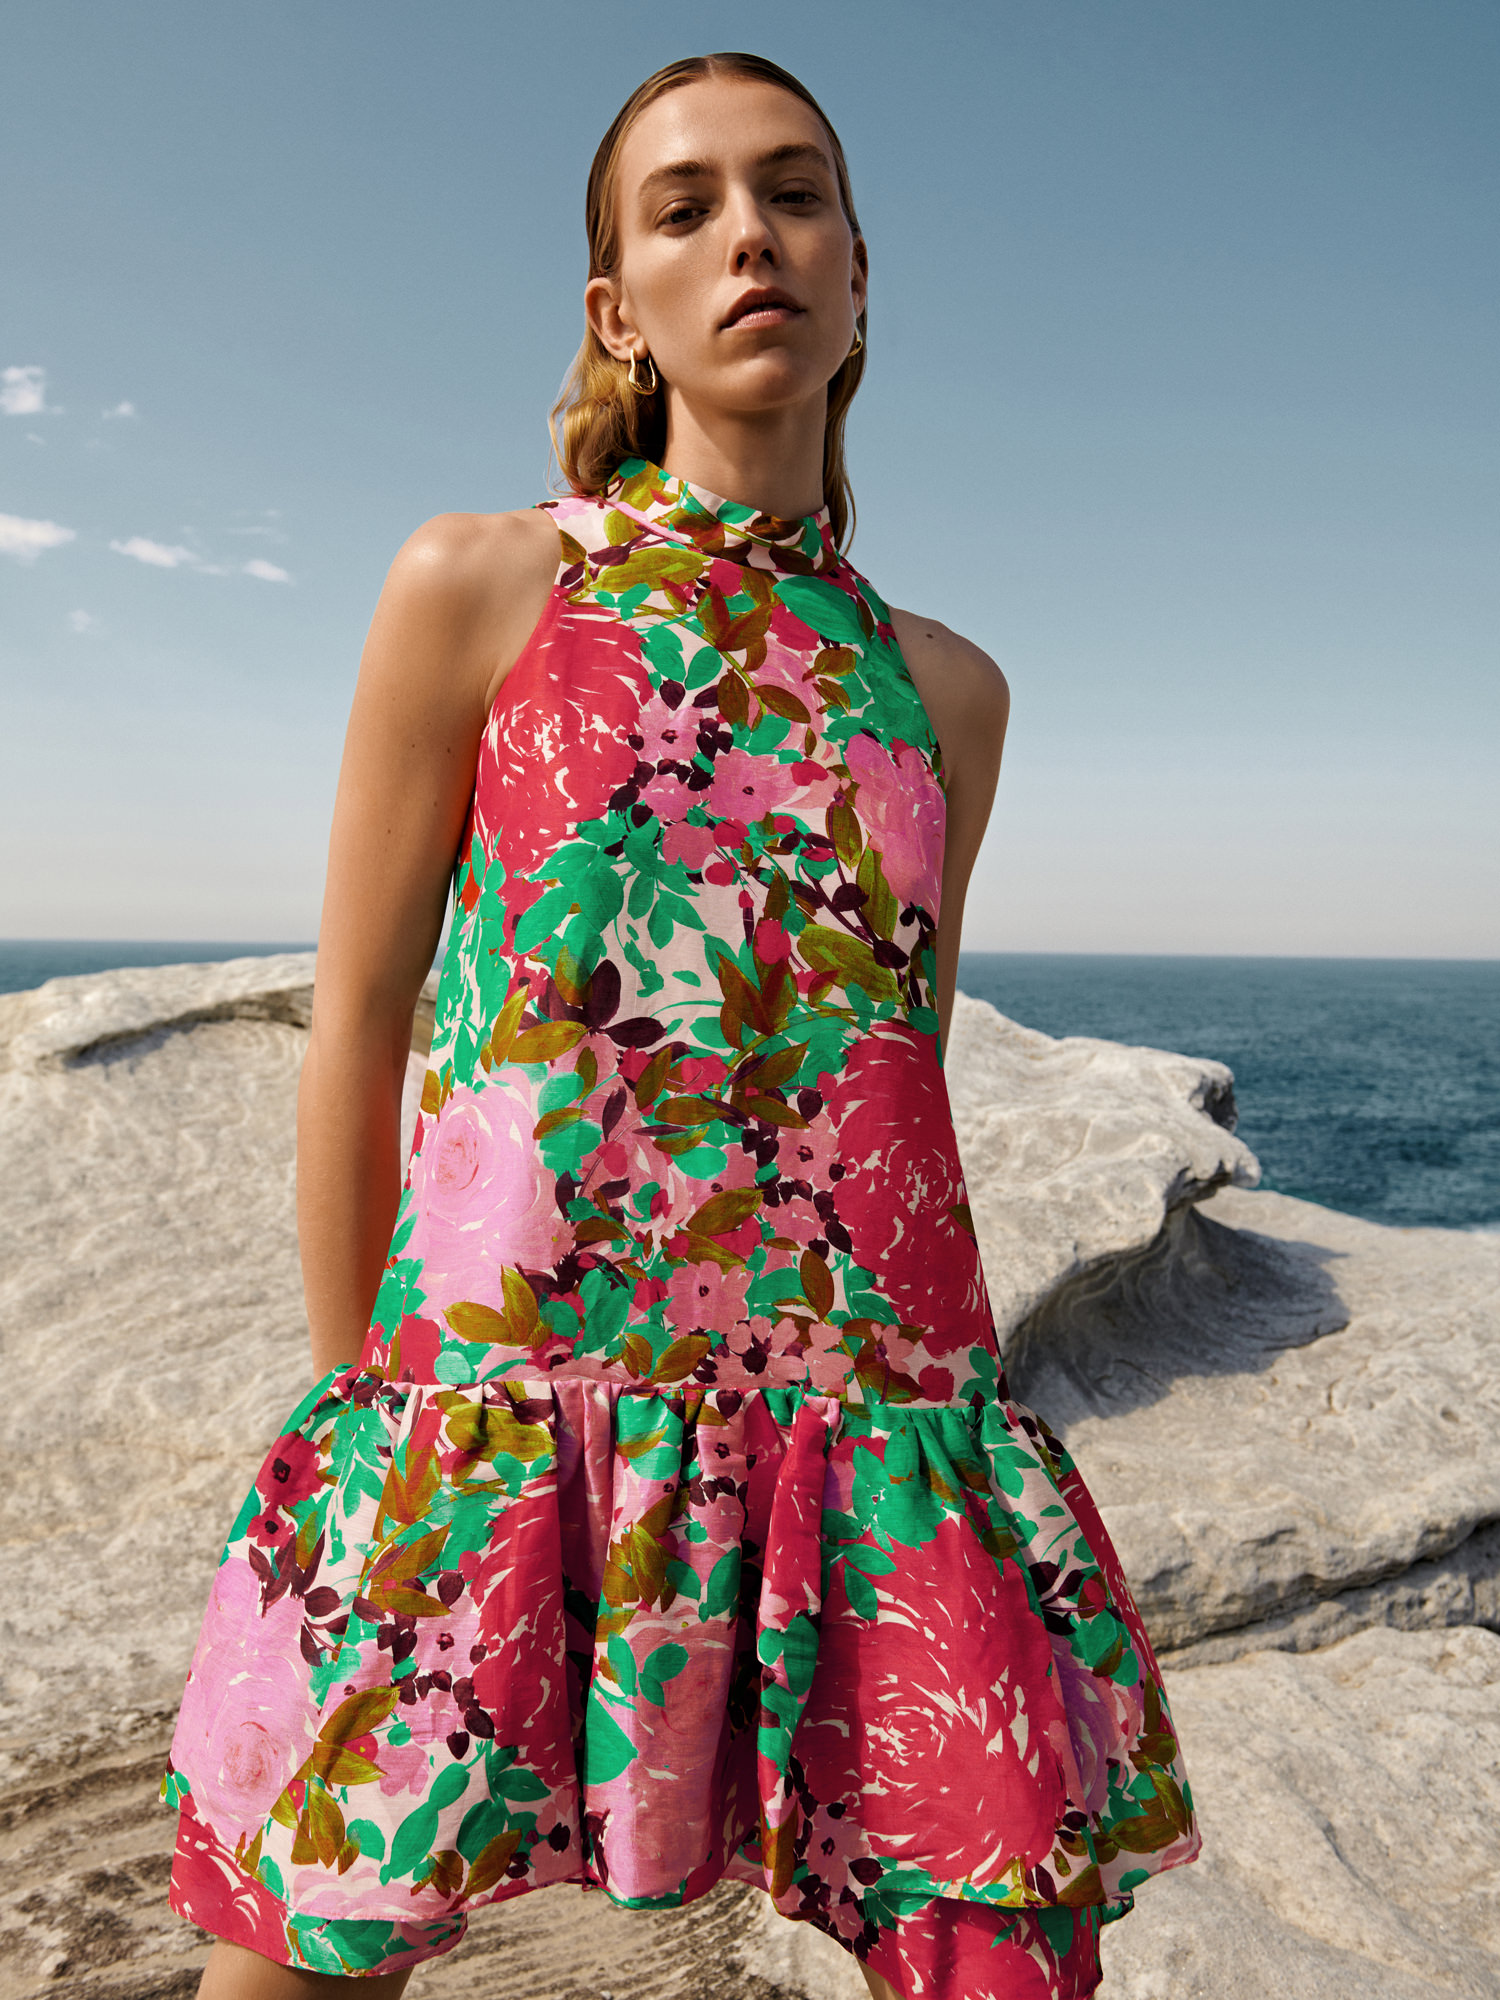 Square Mesh Midi Dress | Buy Dresses Online - Veronika Maine